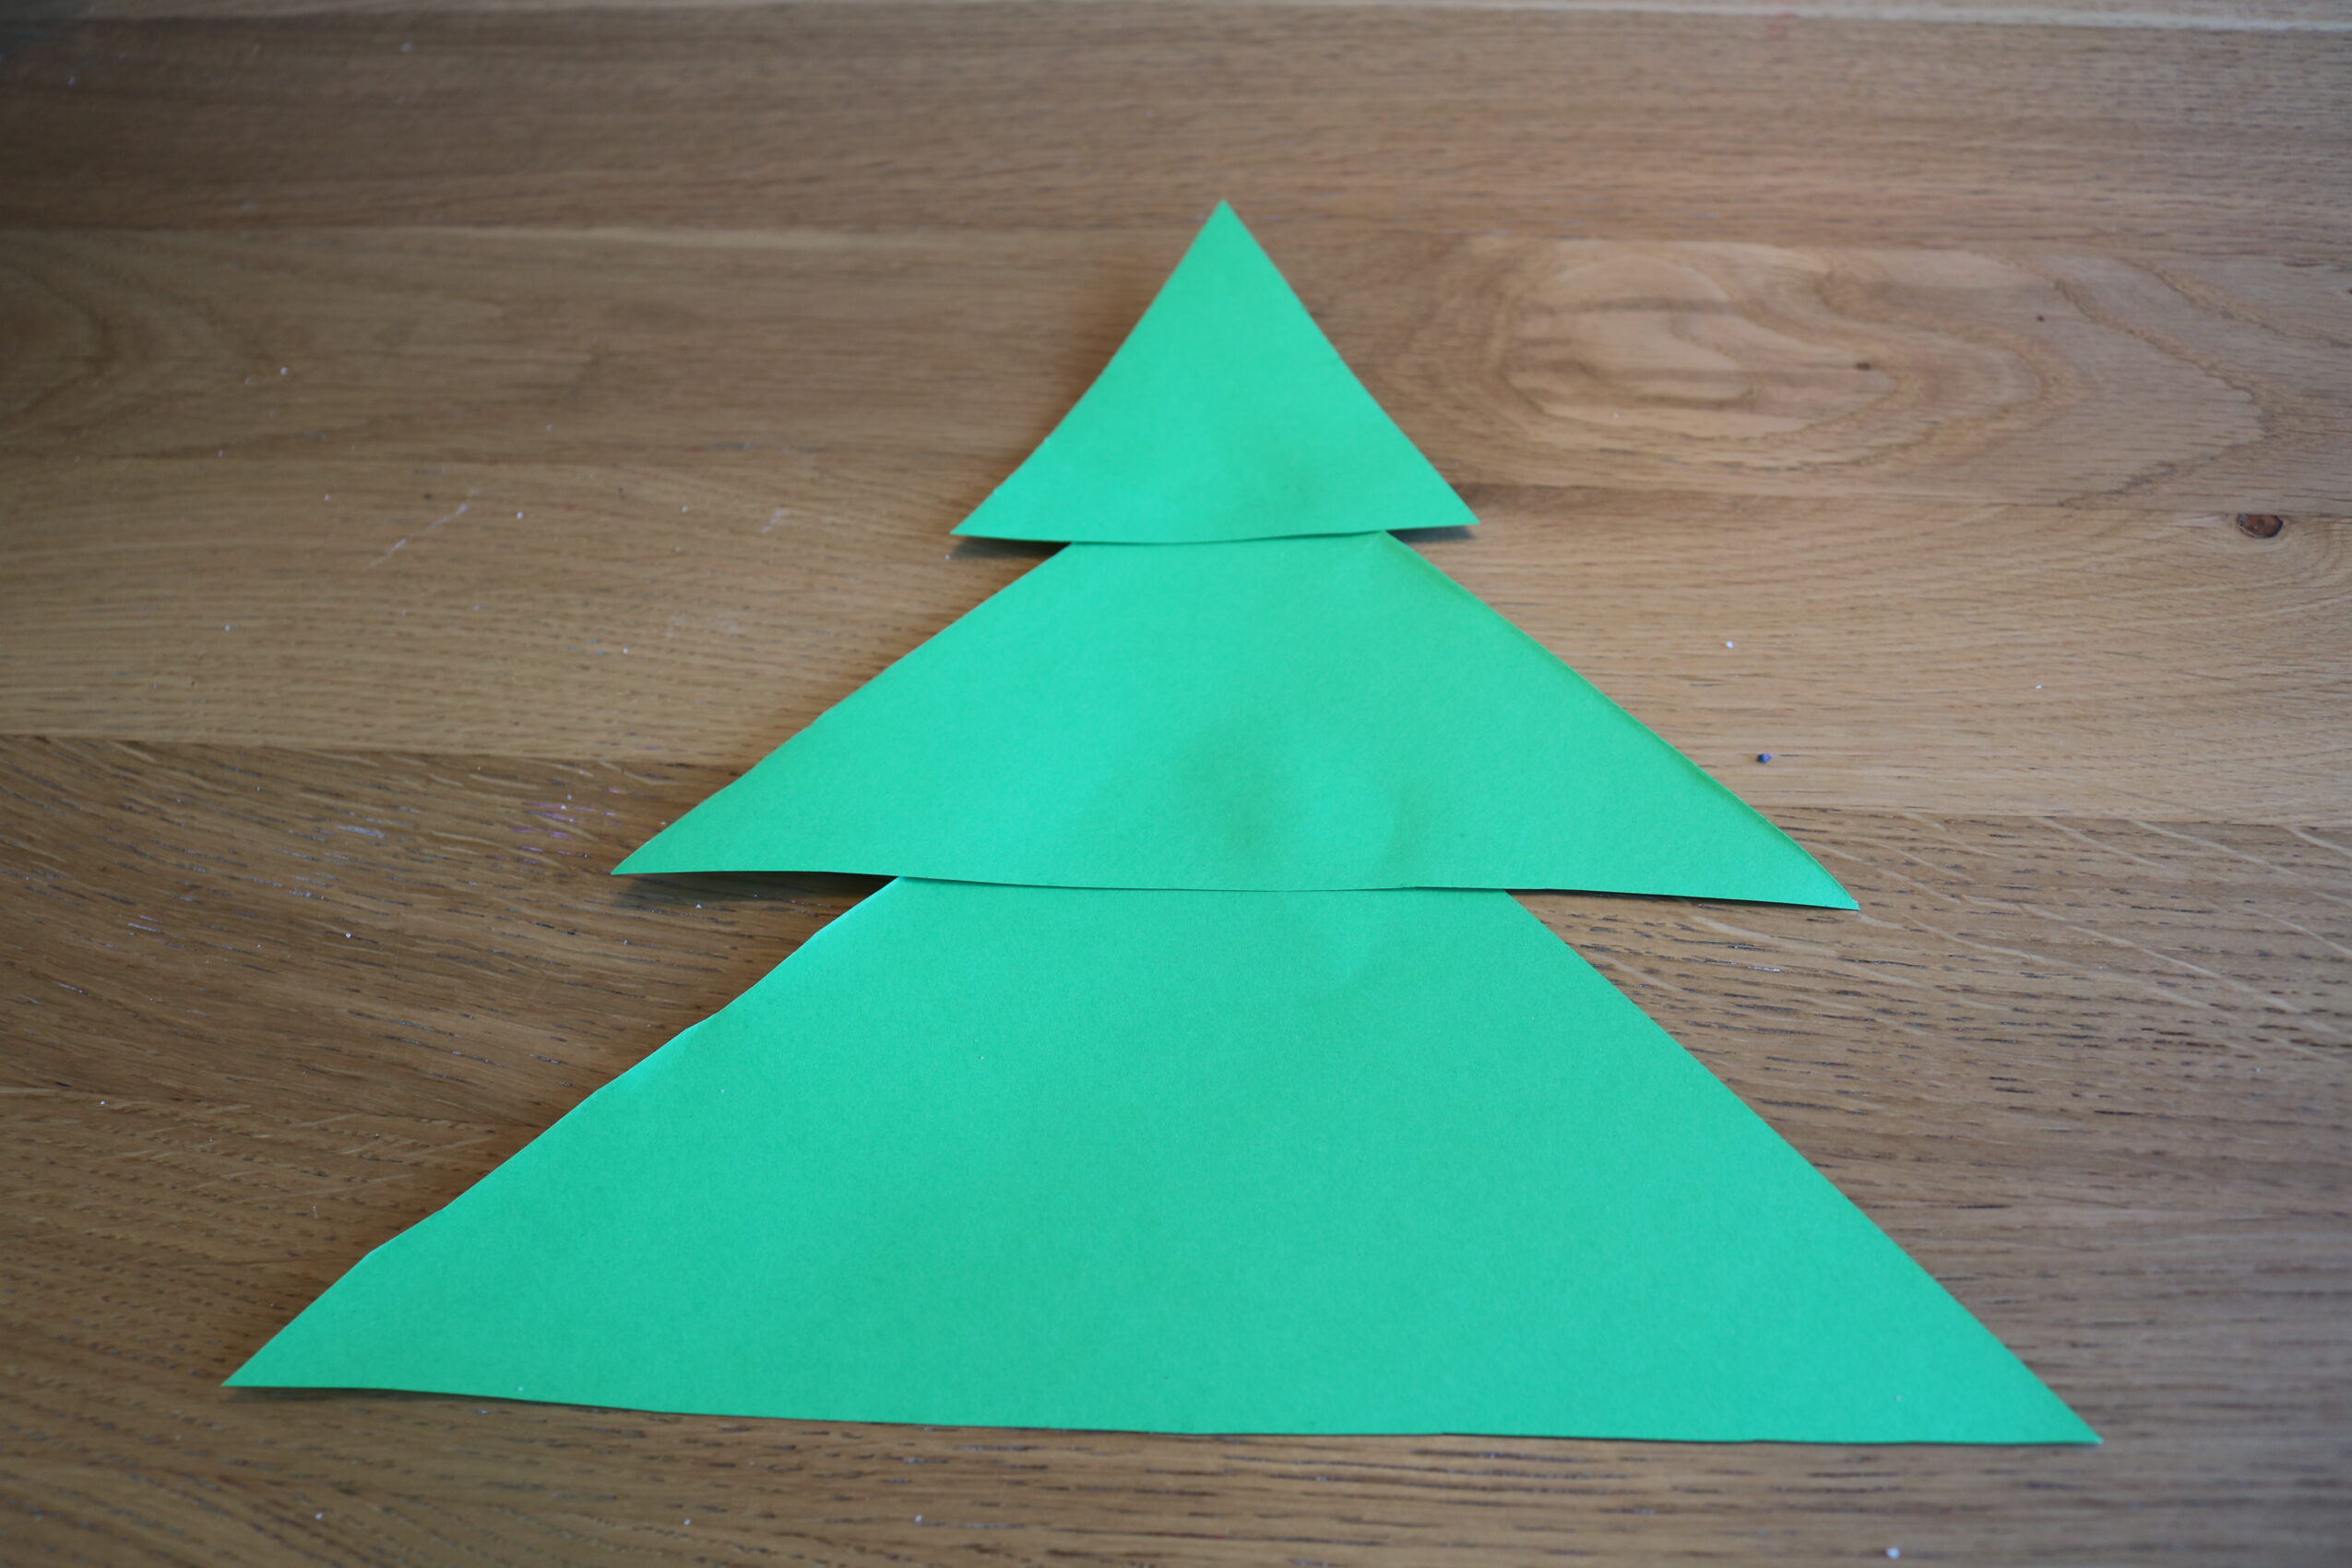 Drie driehoeken aan elkaar